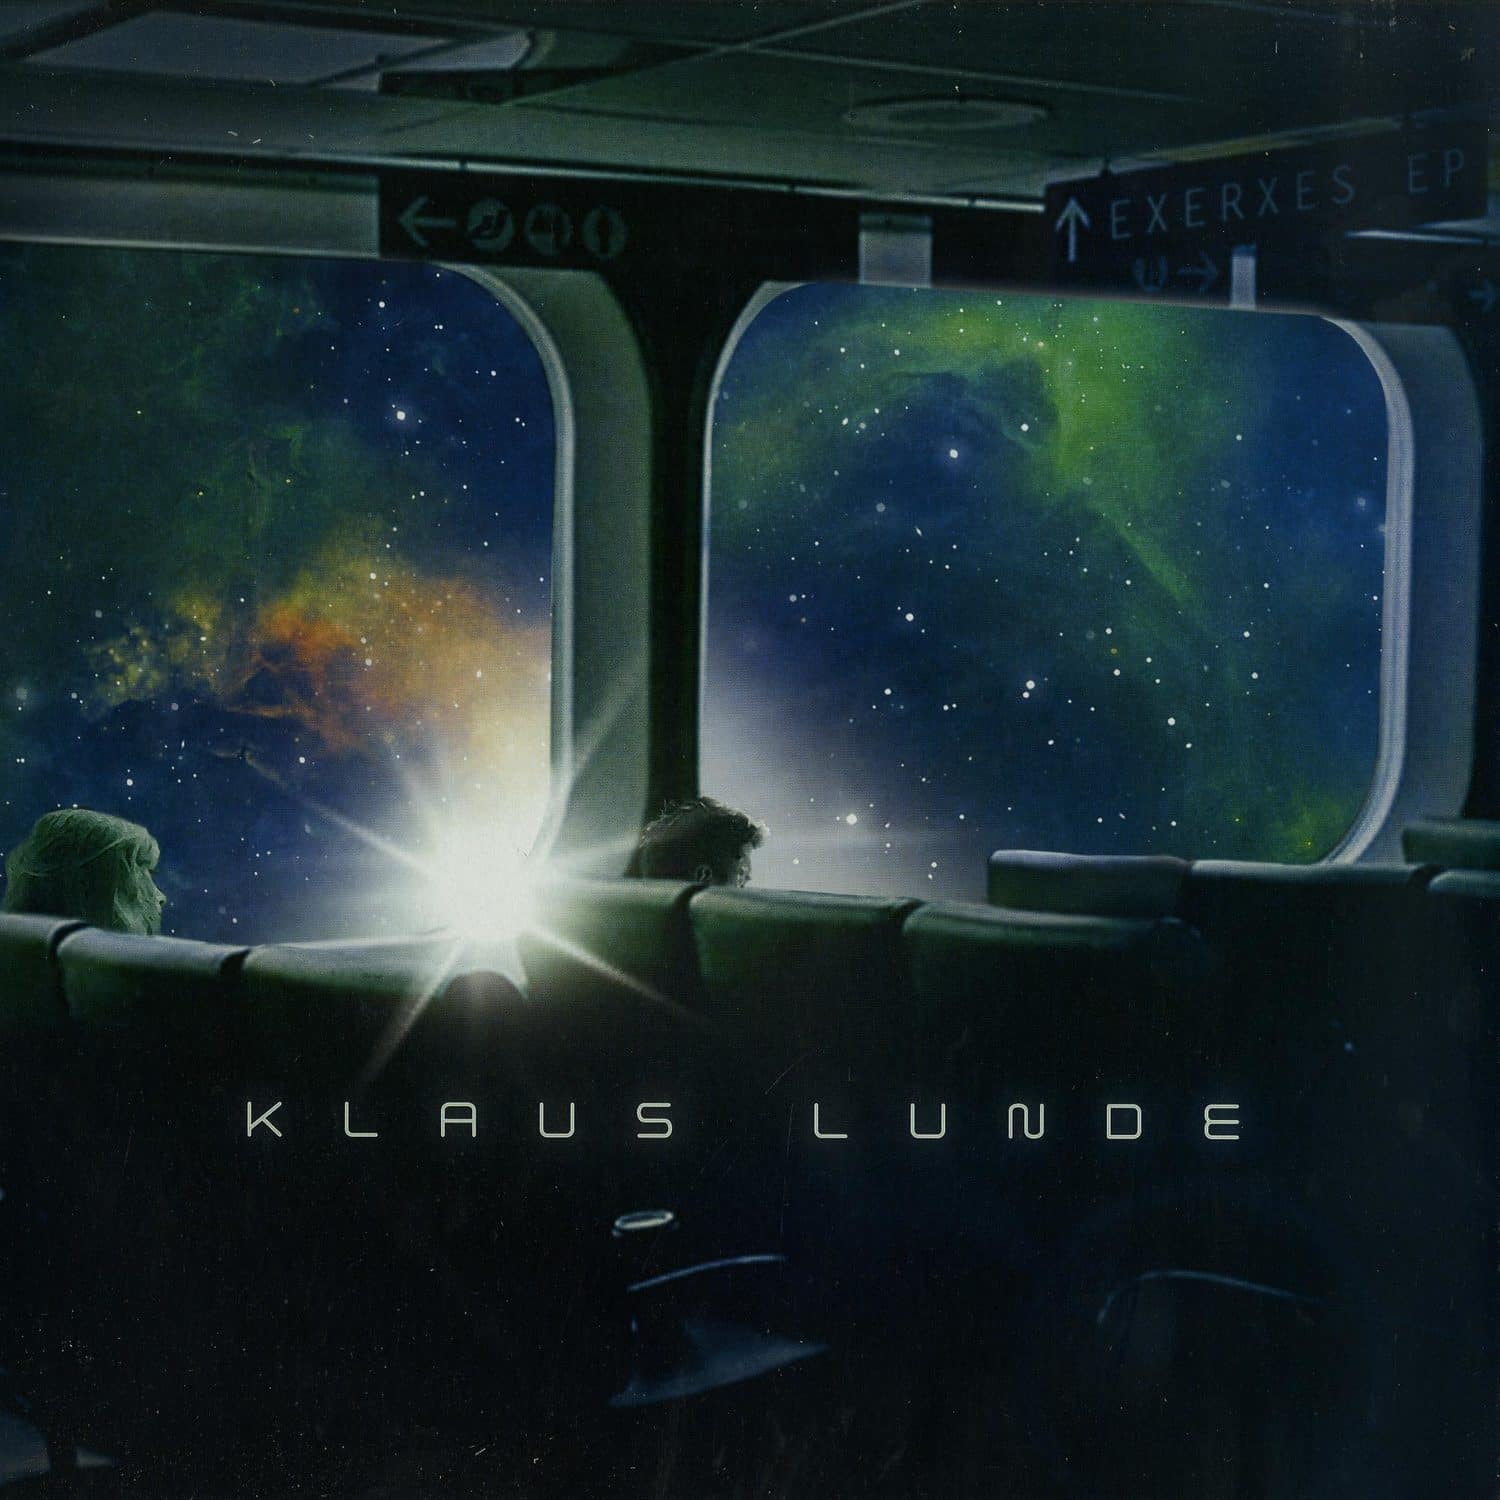 Klaus Lunde - EXERXES EP